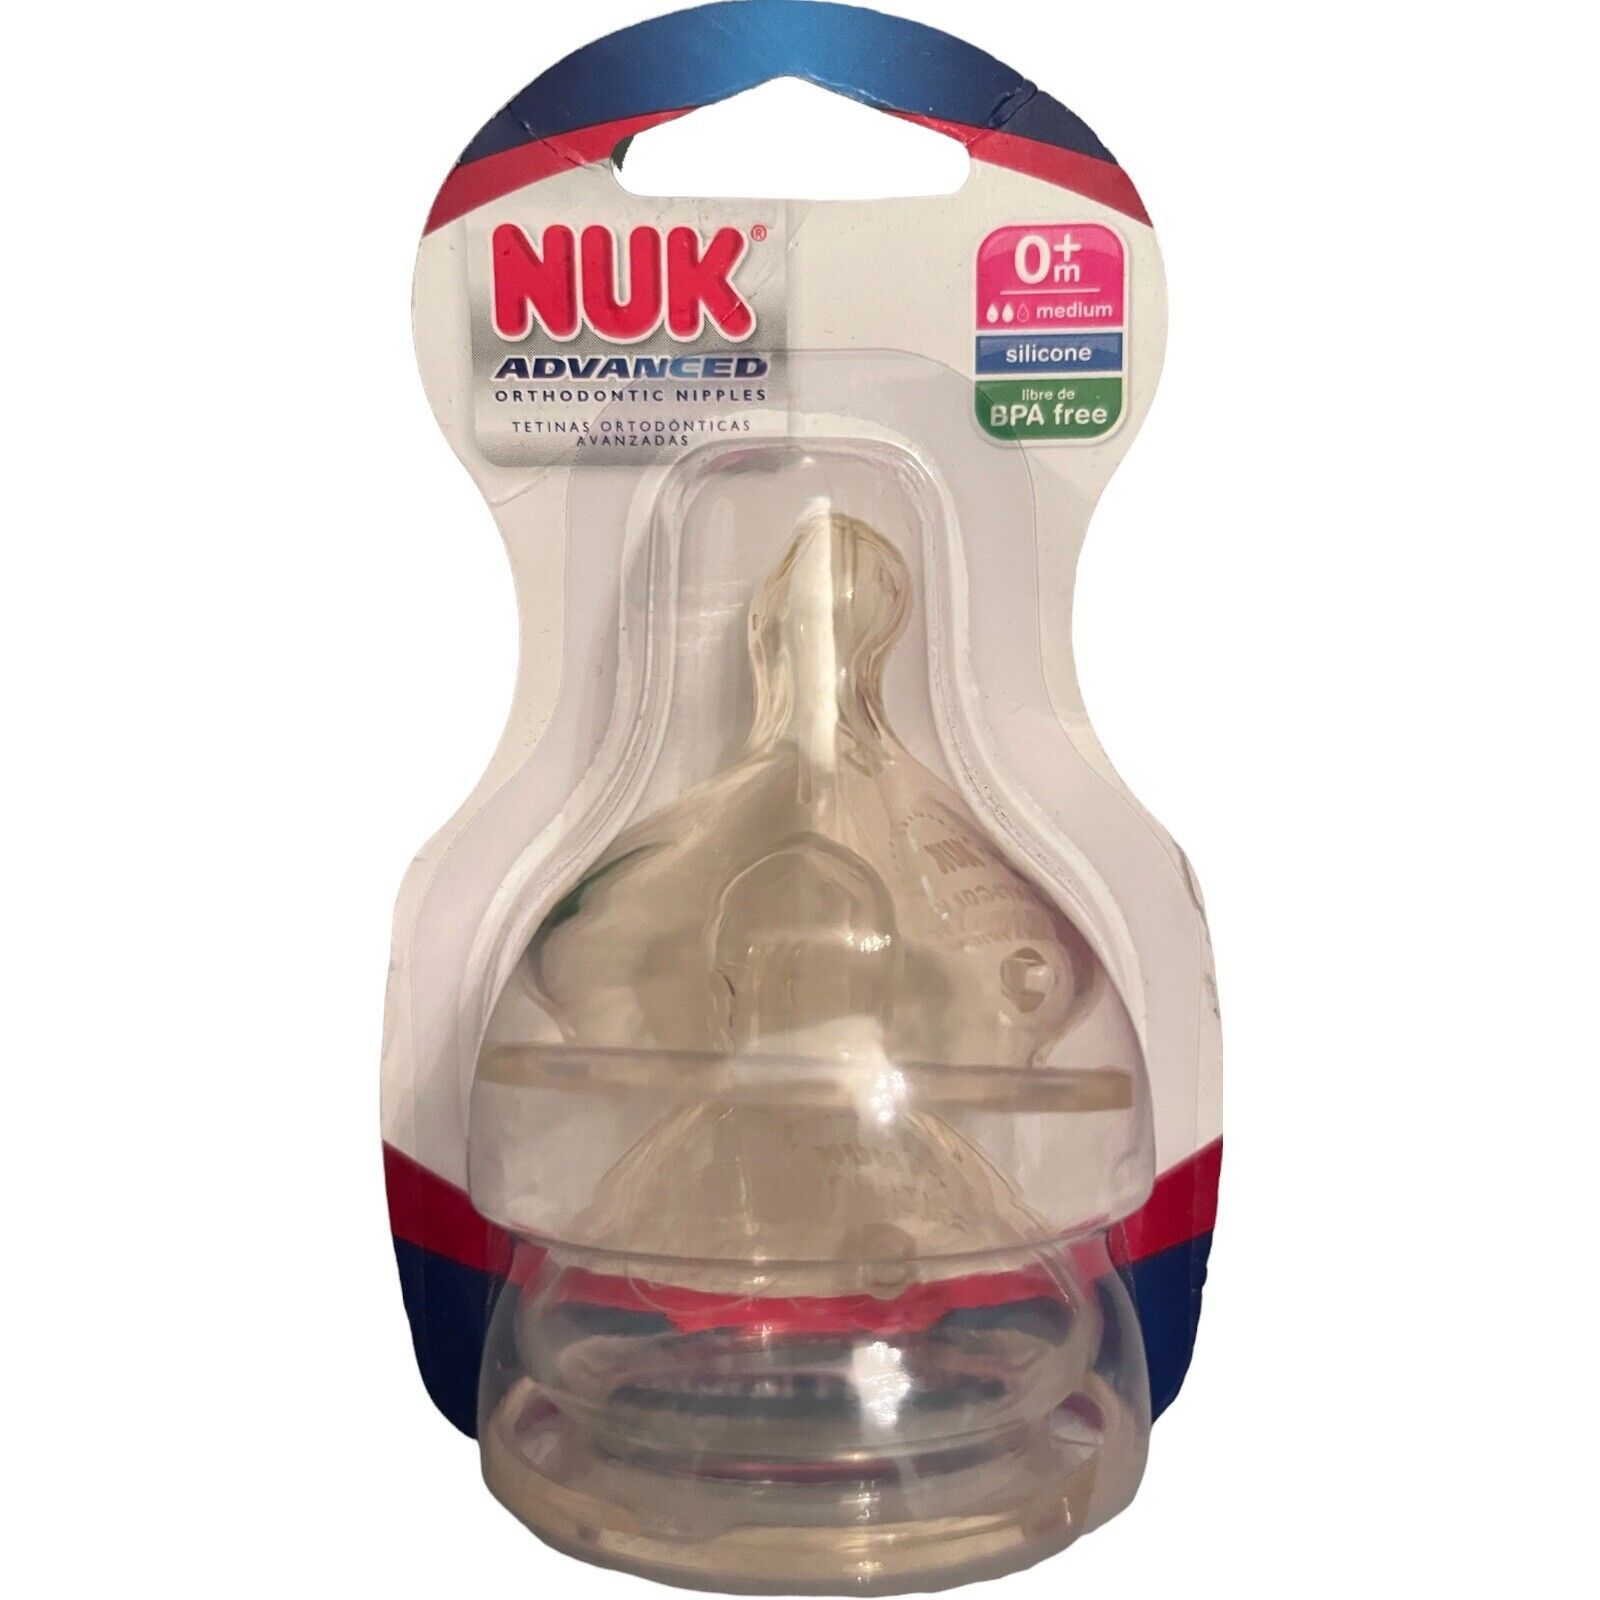 New 2 Pack NUK Advanced Orthodontic Nipples 0+ Medium Flow Silicone BPA Free - $4.95